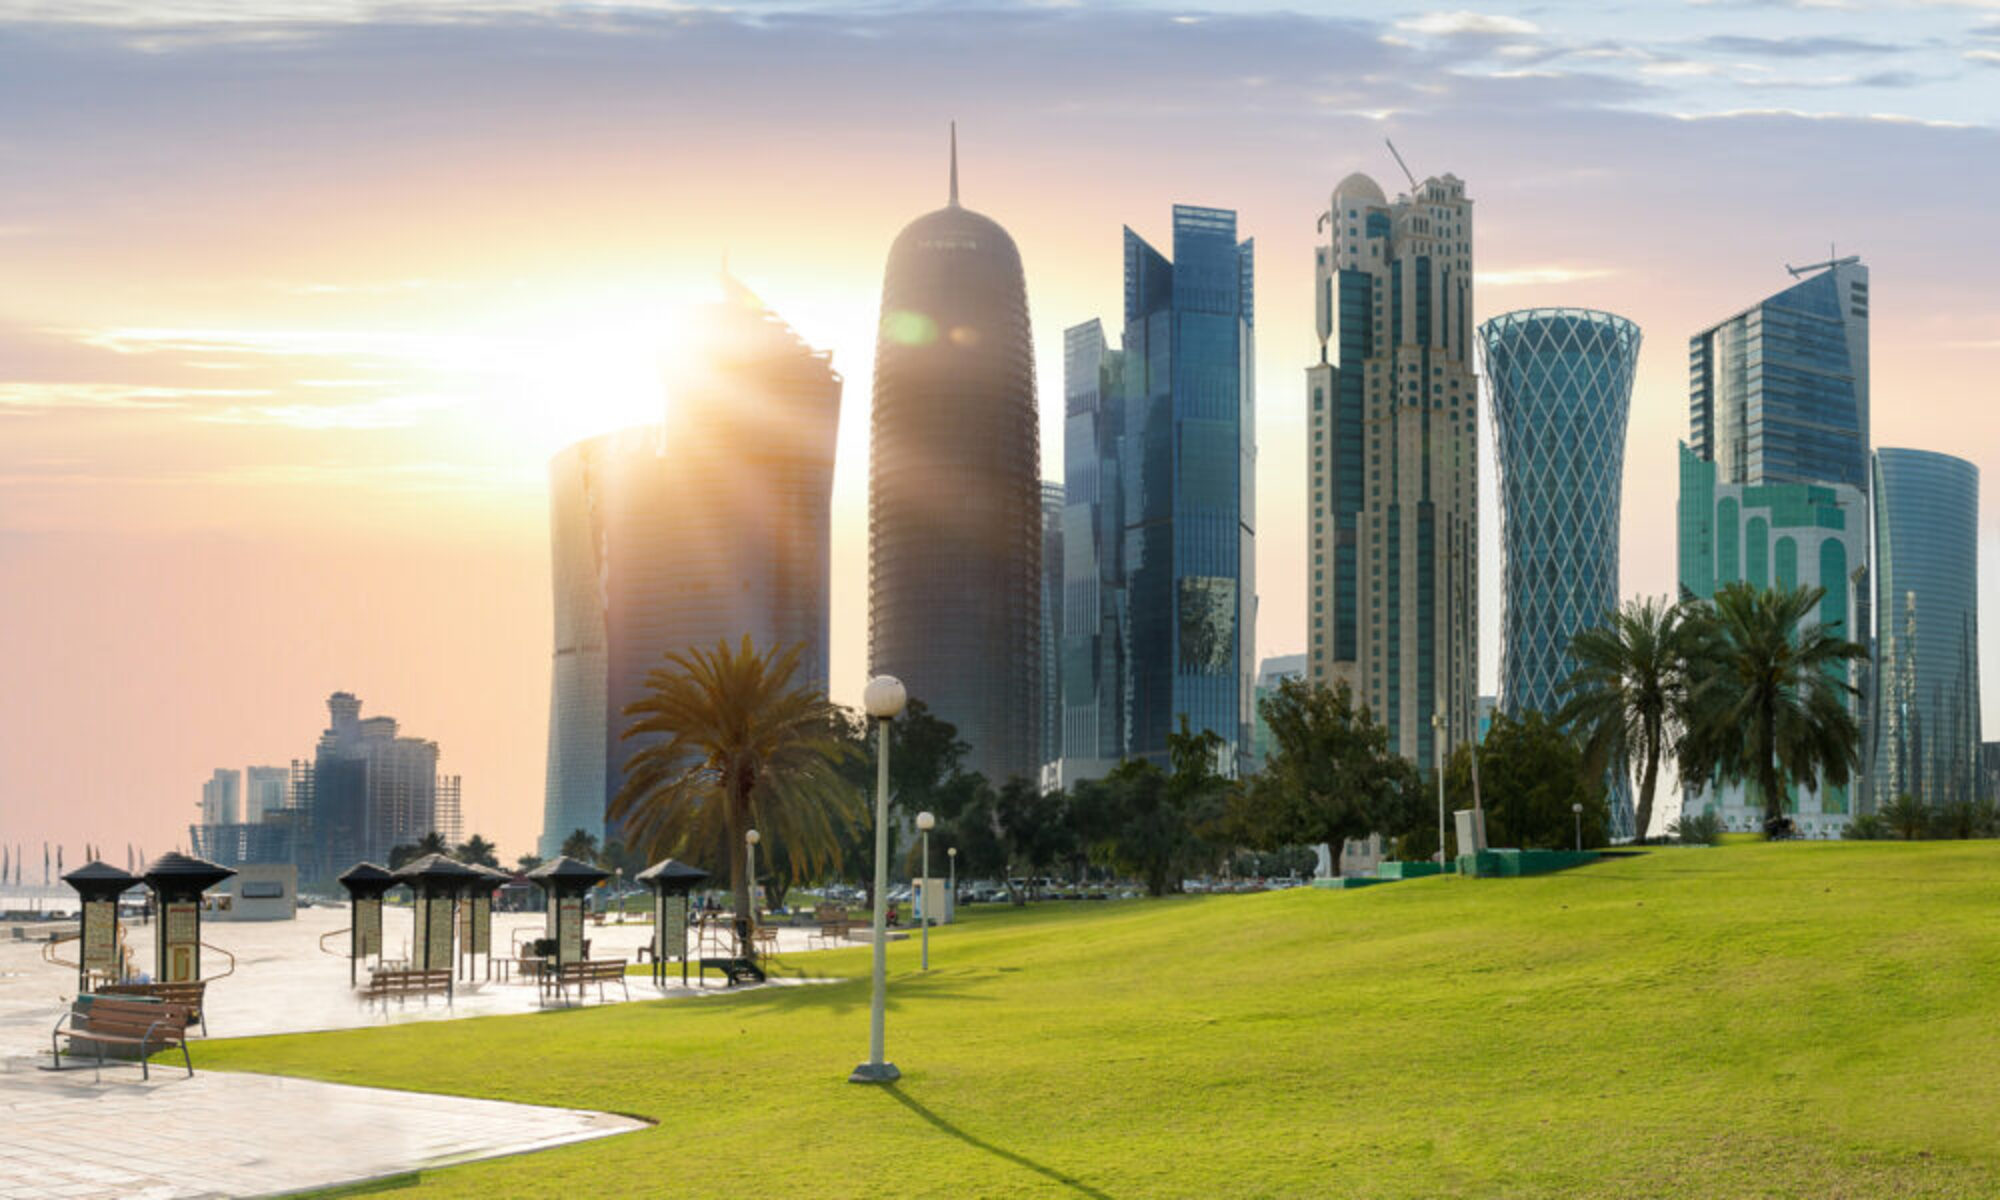 le Qatar continue de cultiver son propre gazon